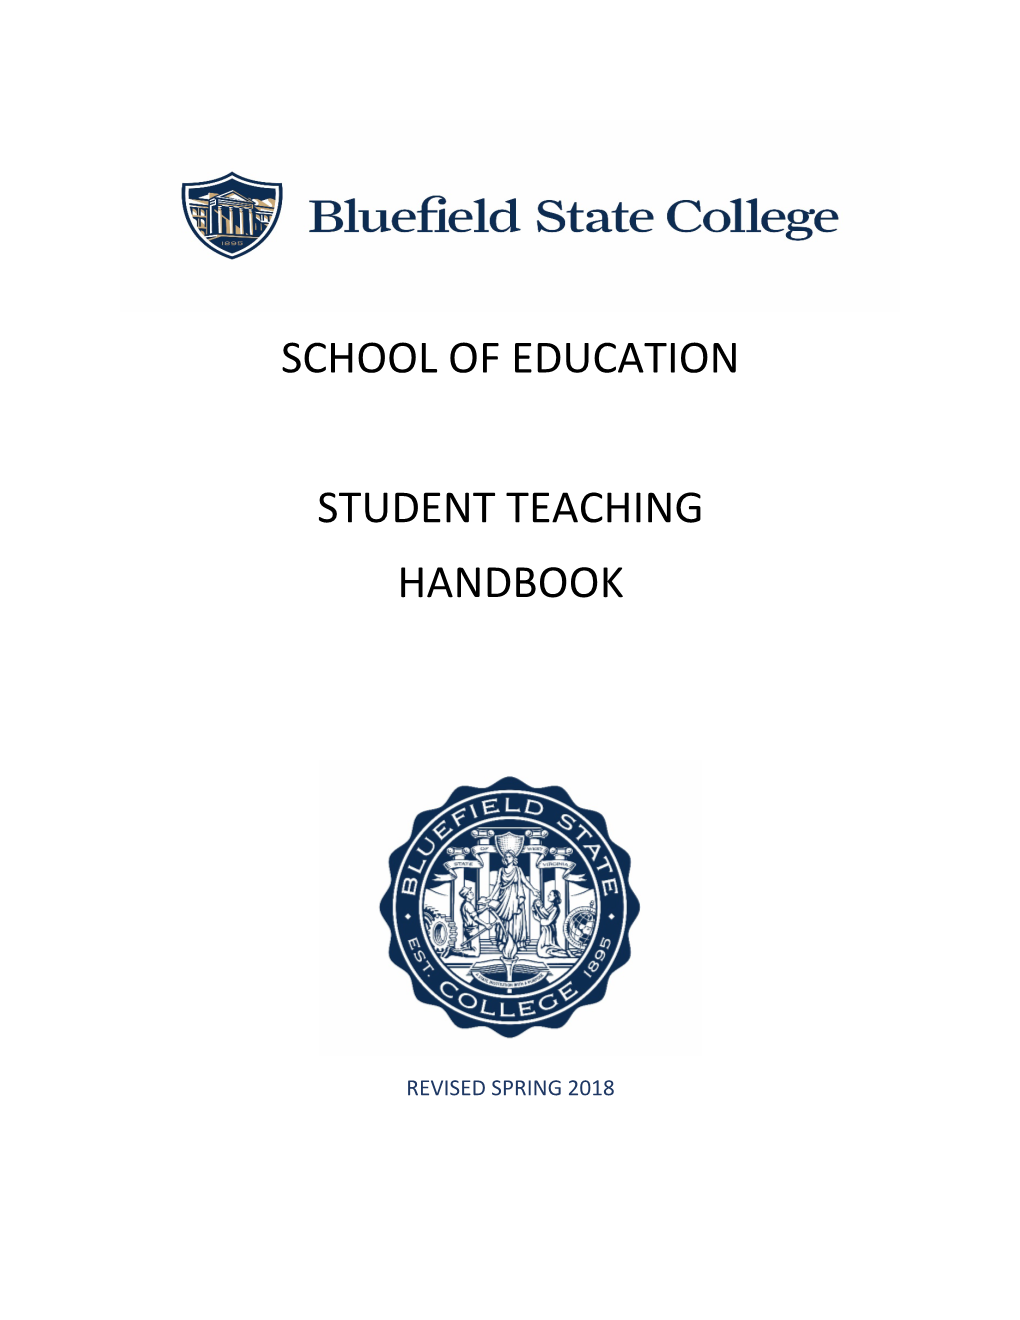 School of Education Student Teaching Handbook